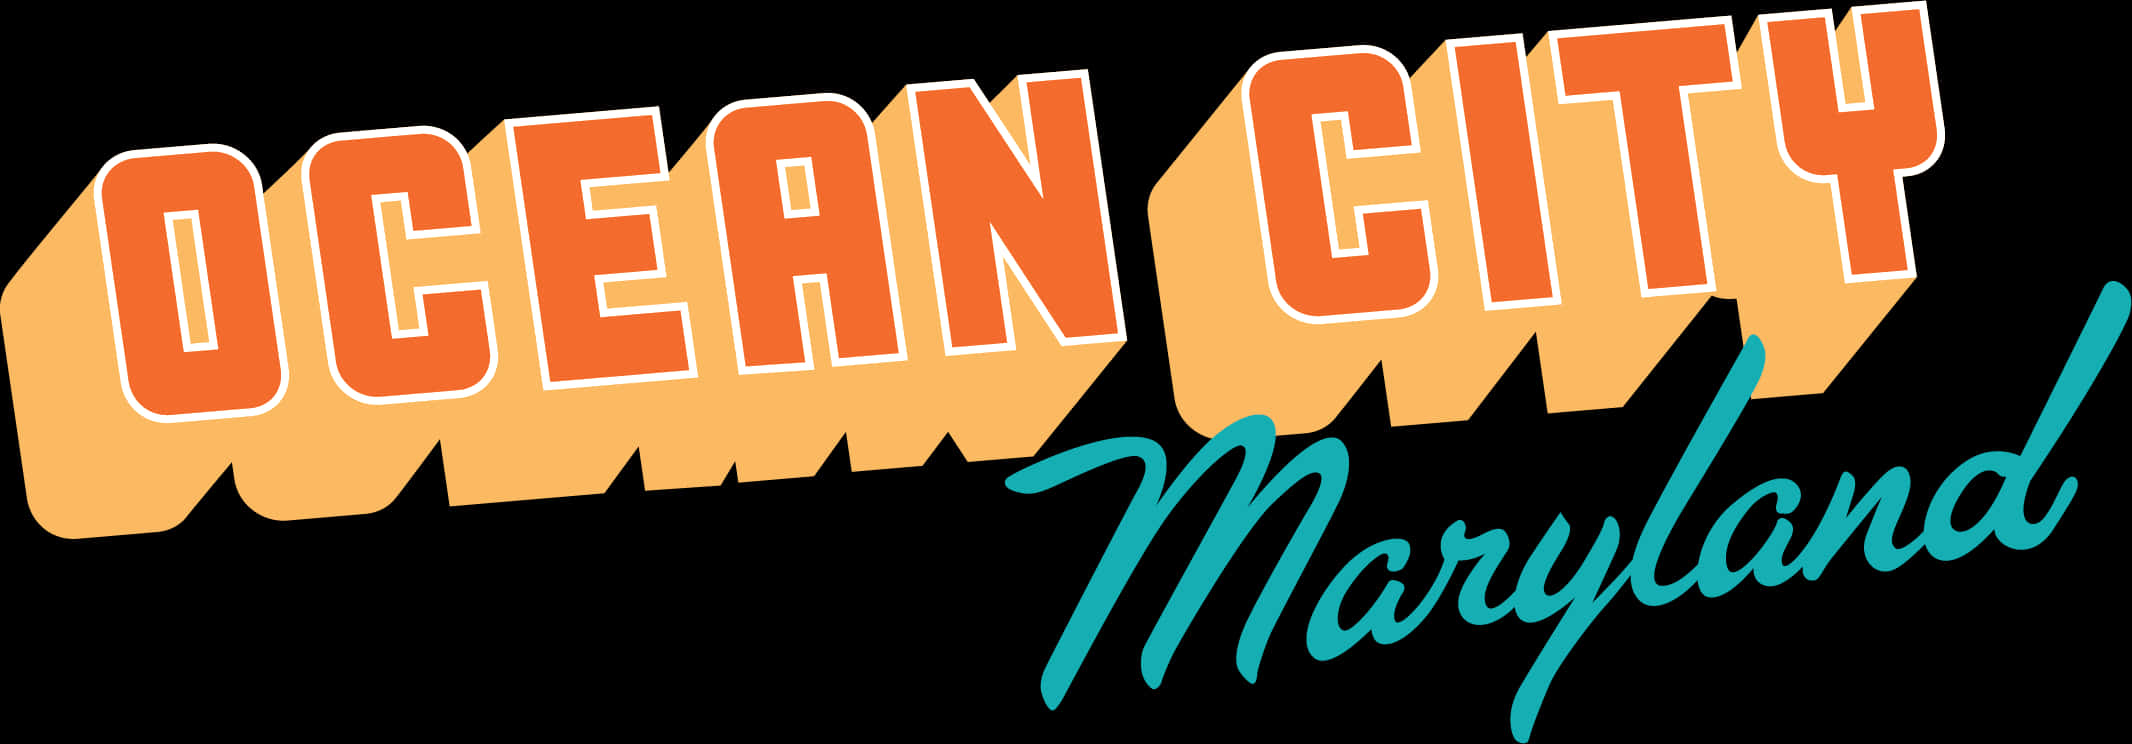 Ocean City Maryland Logo PNG